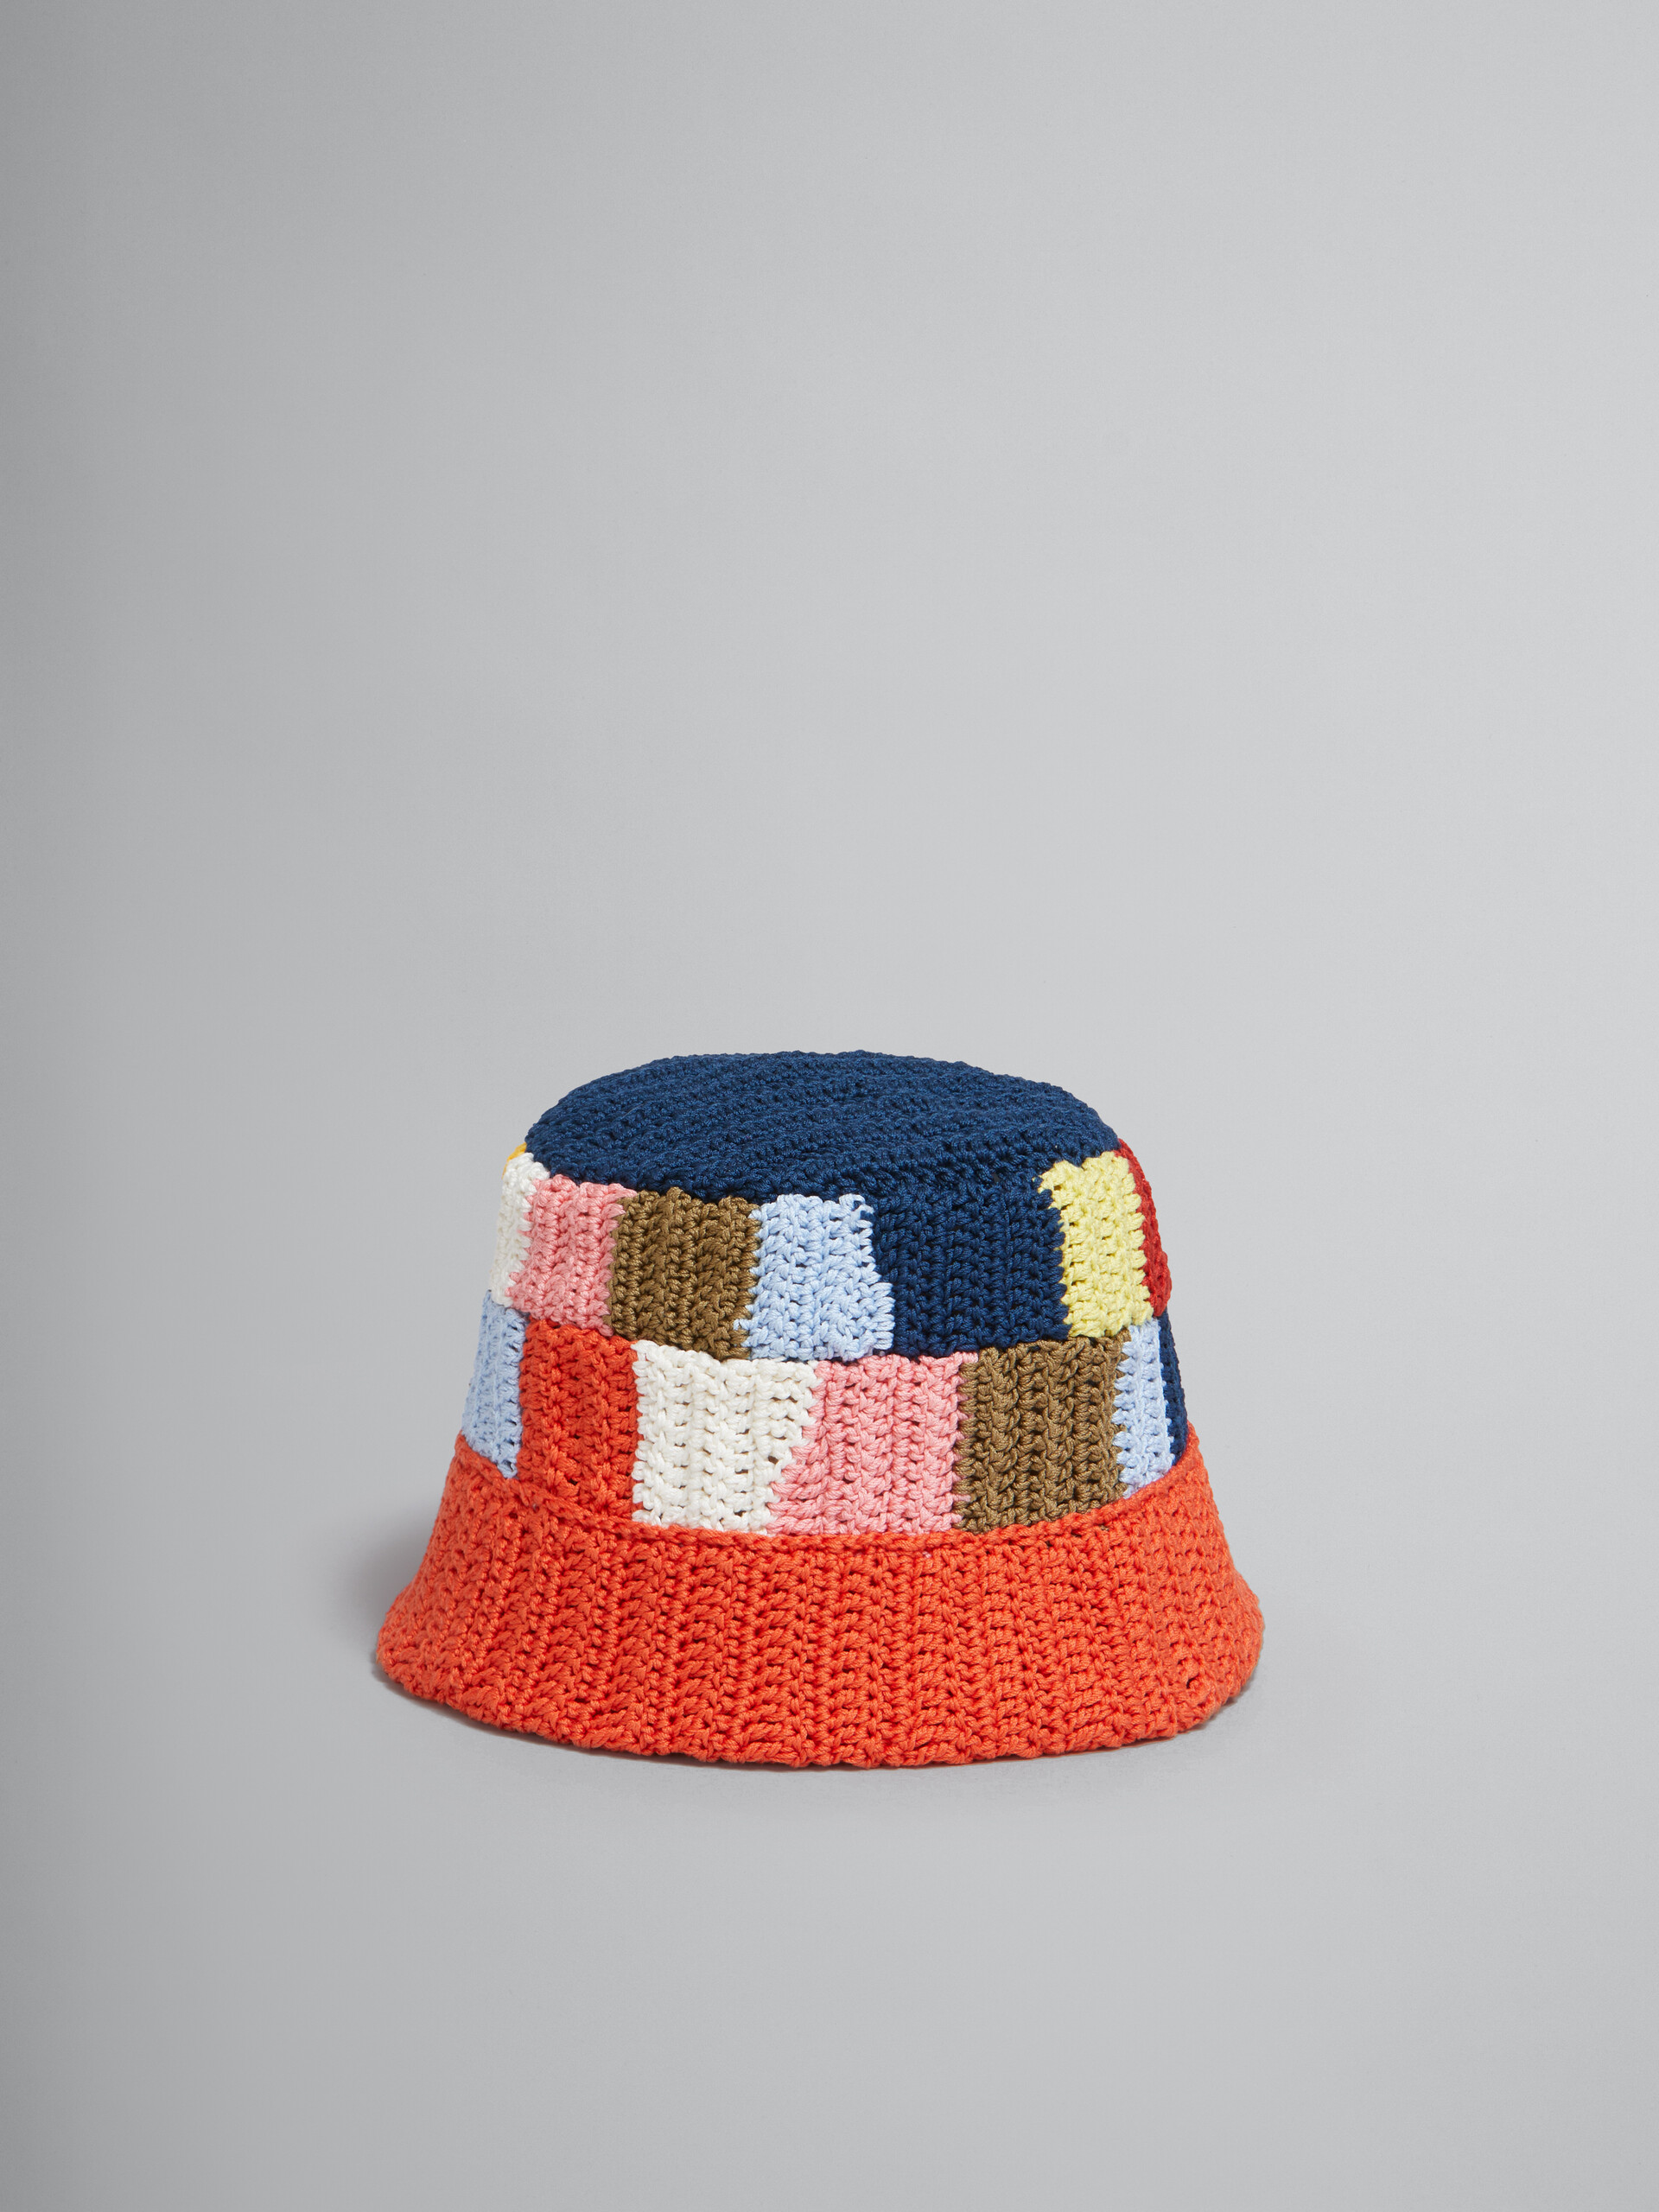 Marni x No Vacancy Inn - Multicolour cotton-knit bucket hat - Hats - Image 1